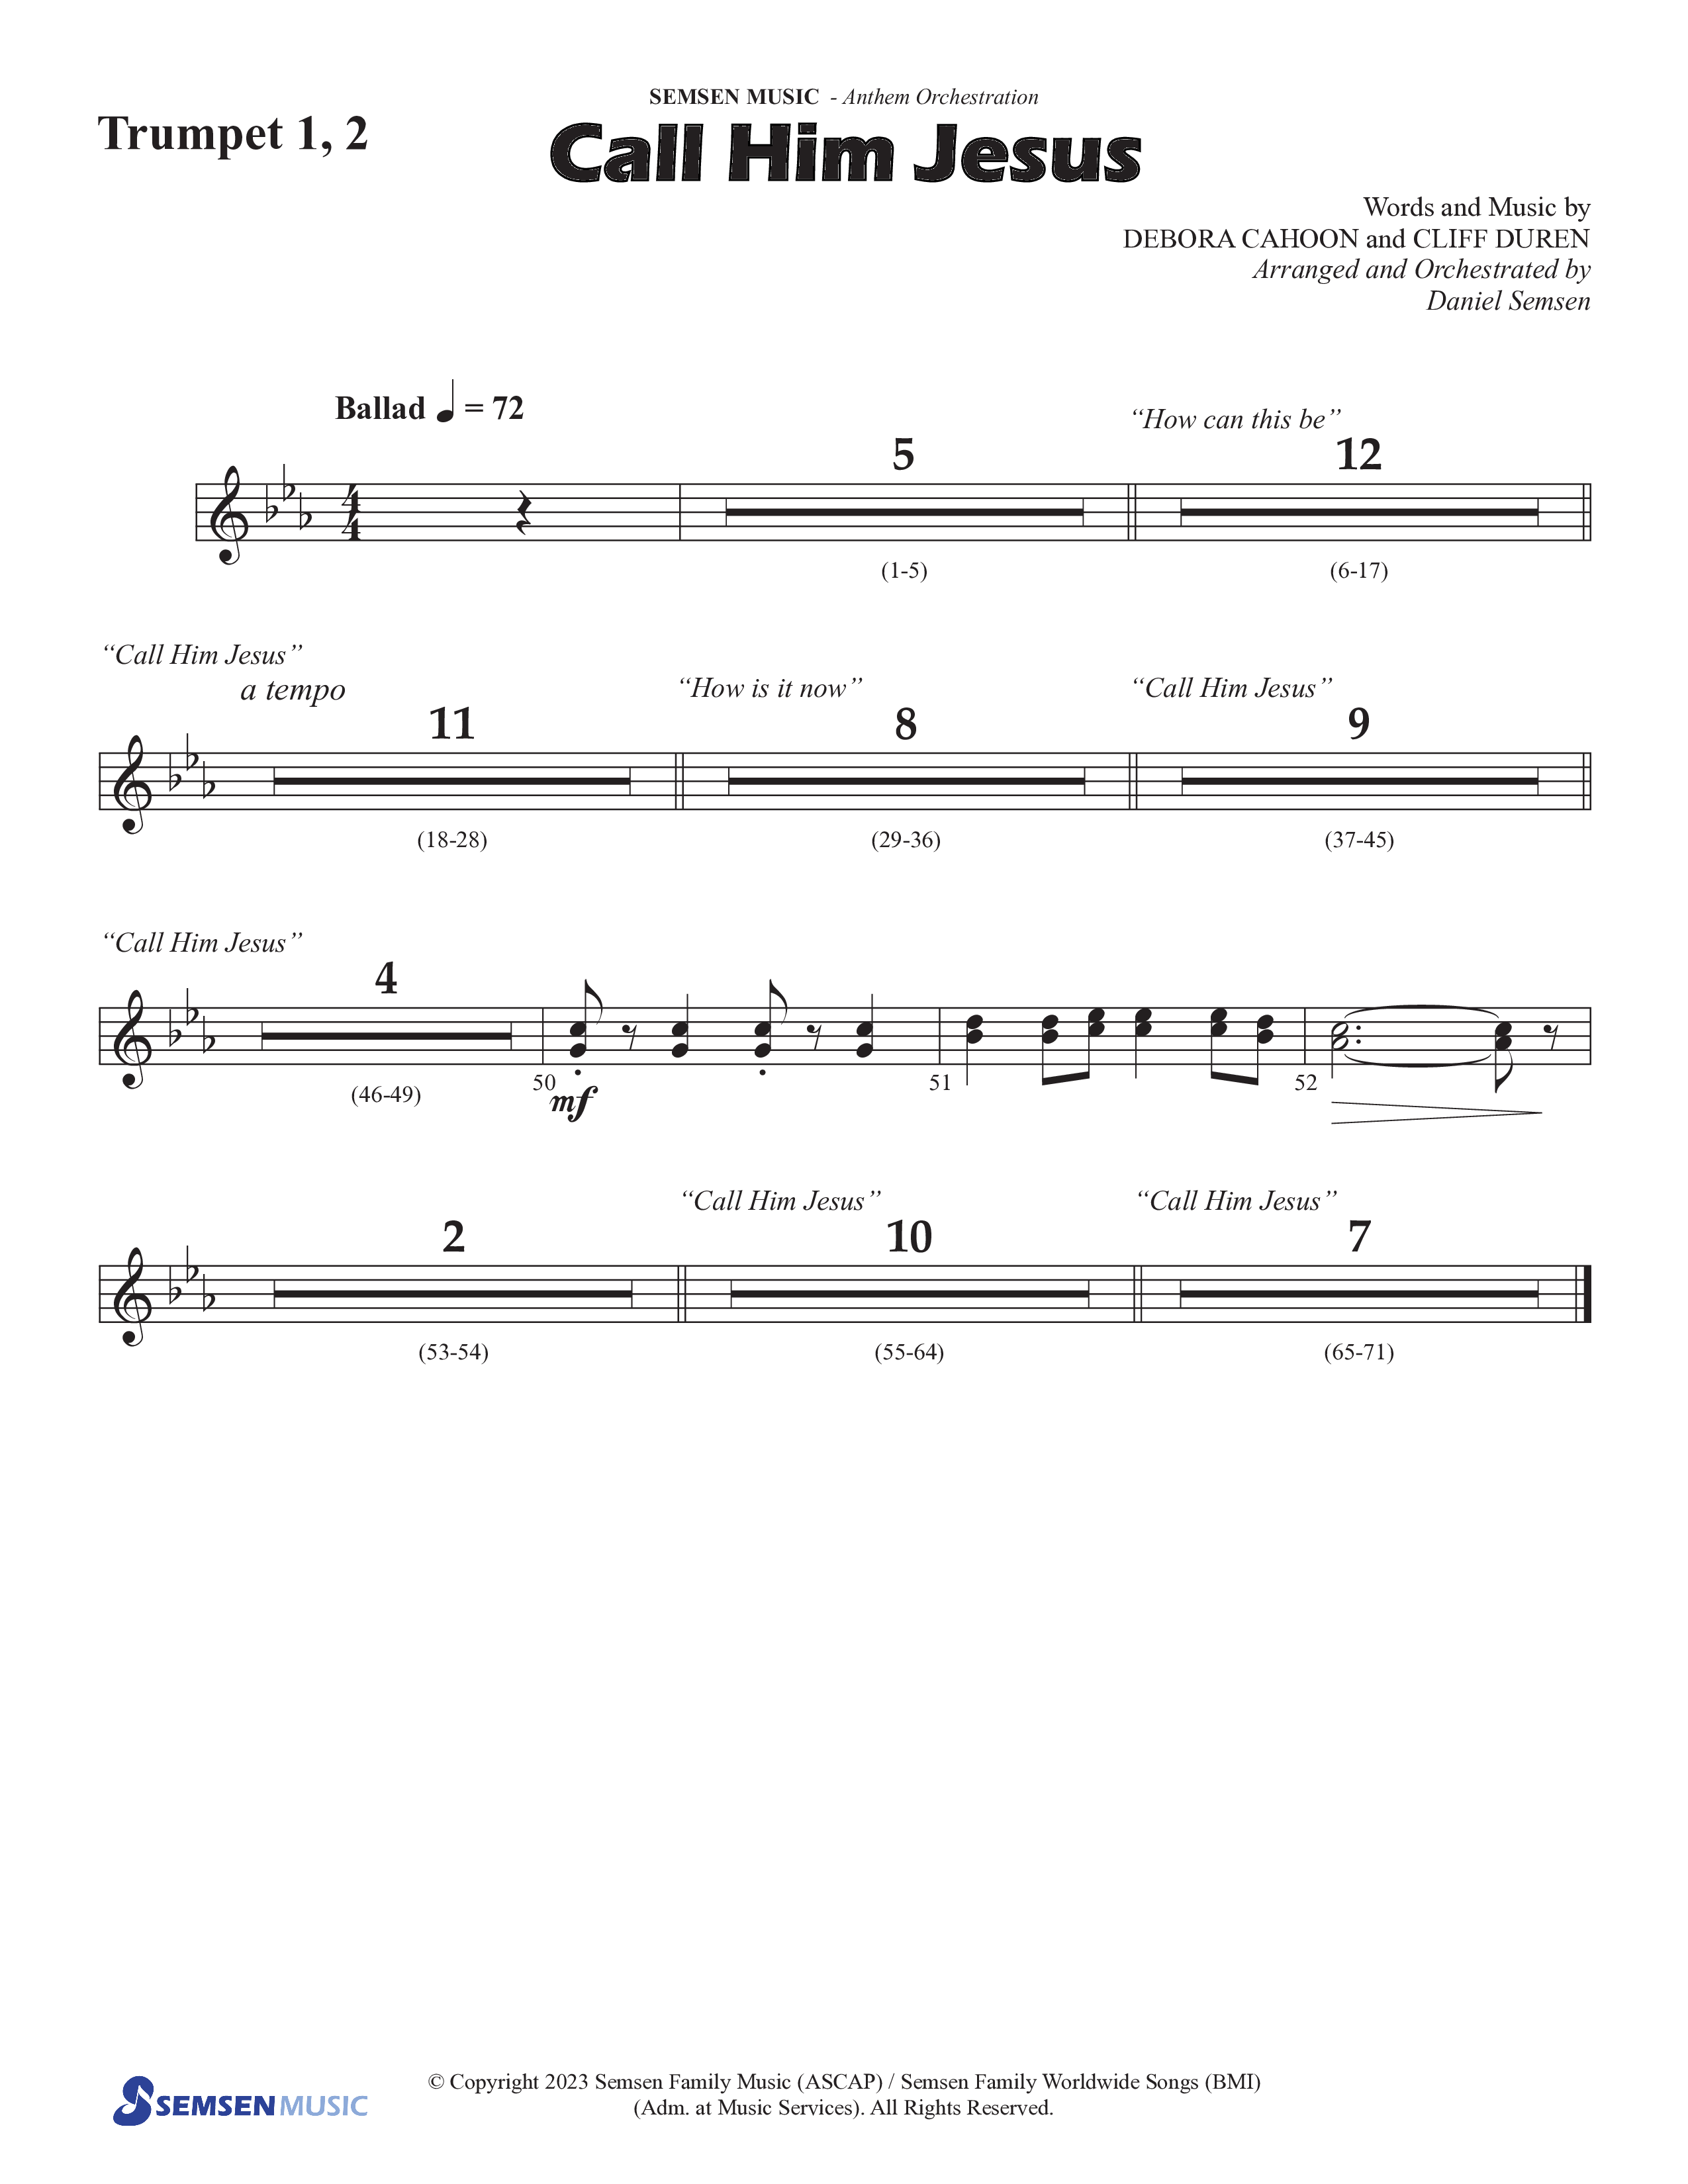 Call Him Jesus (Choral Anthem SATB) Trumpet 1,2 (Semsen Music / Arr. Daniel Semsen)